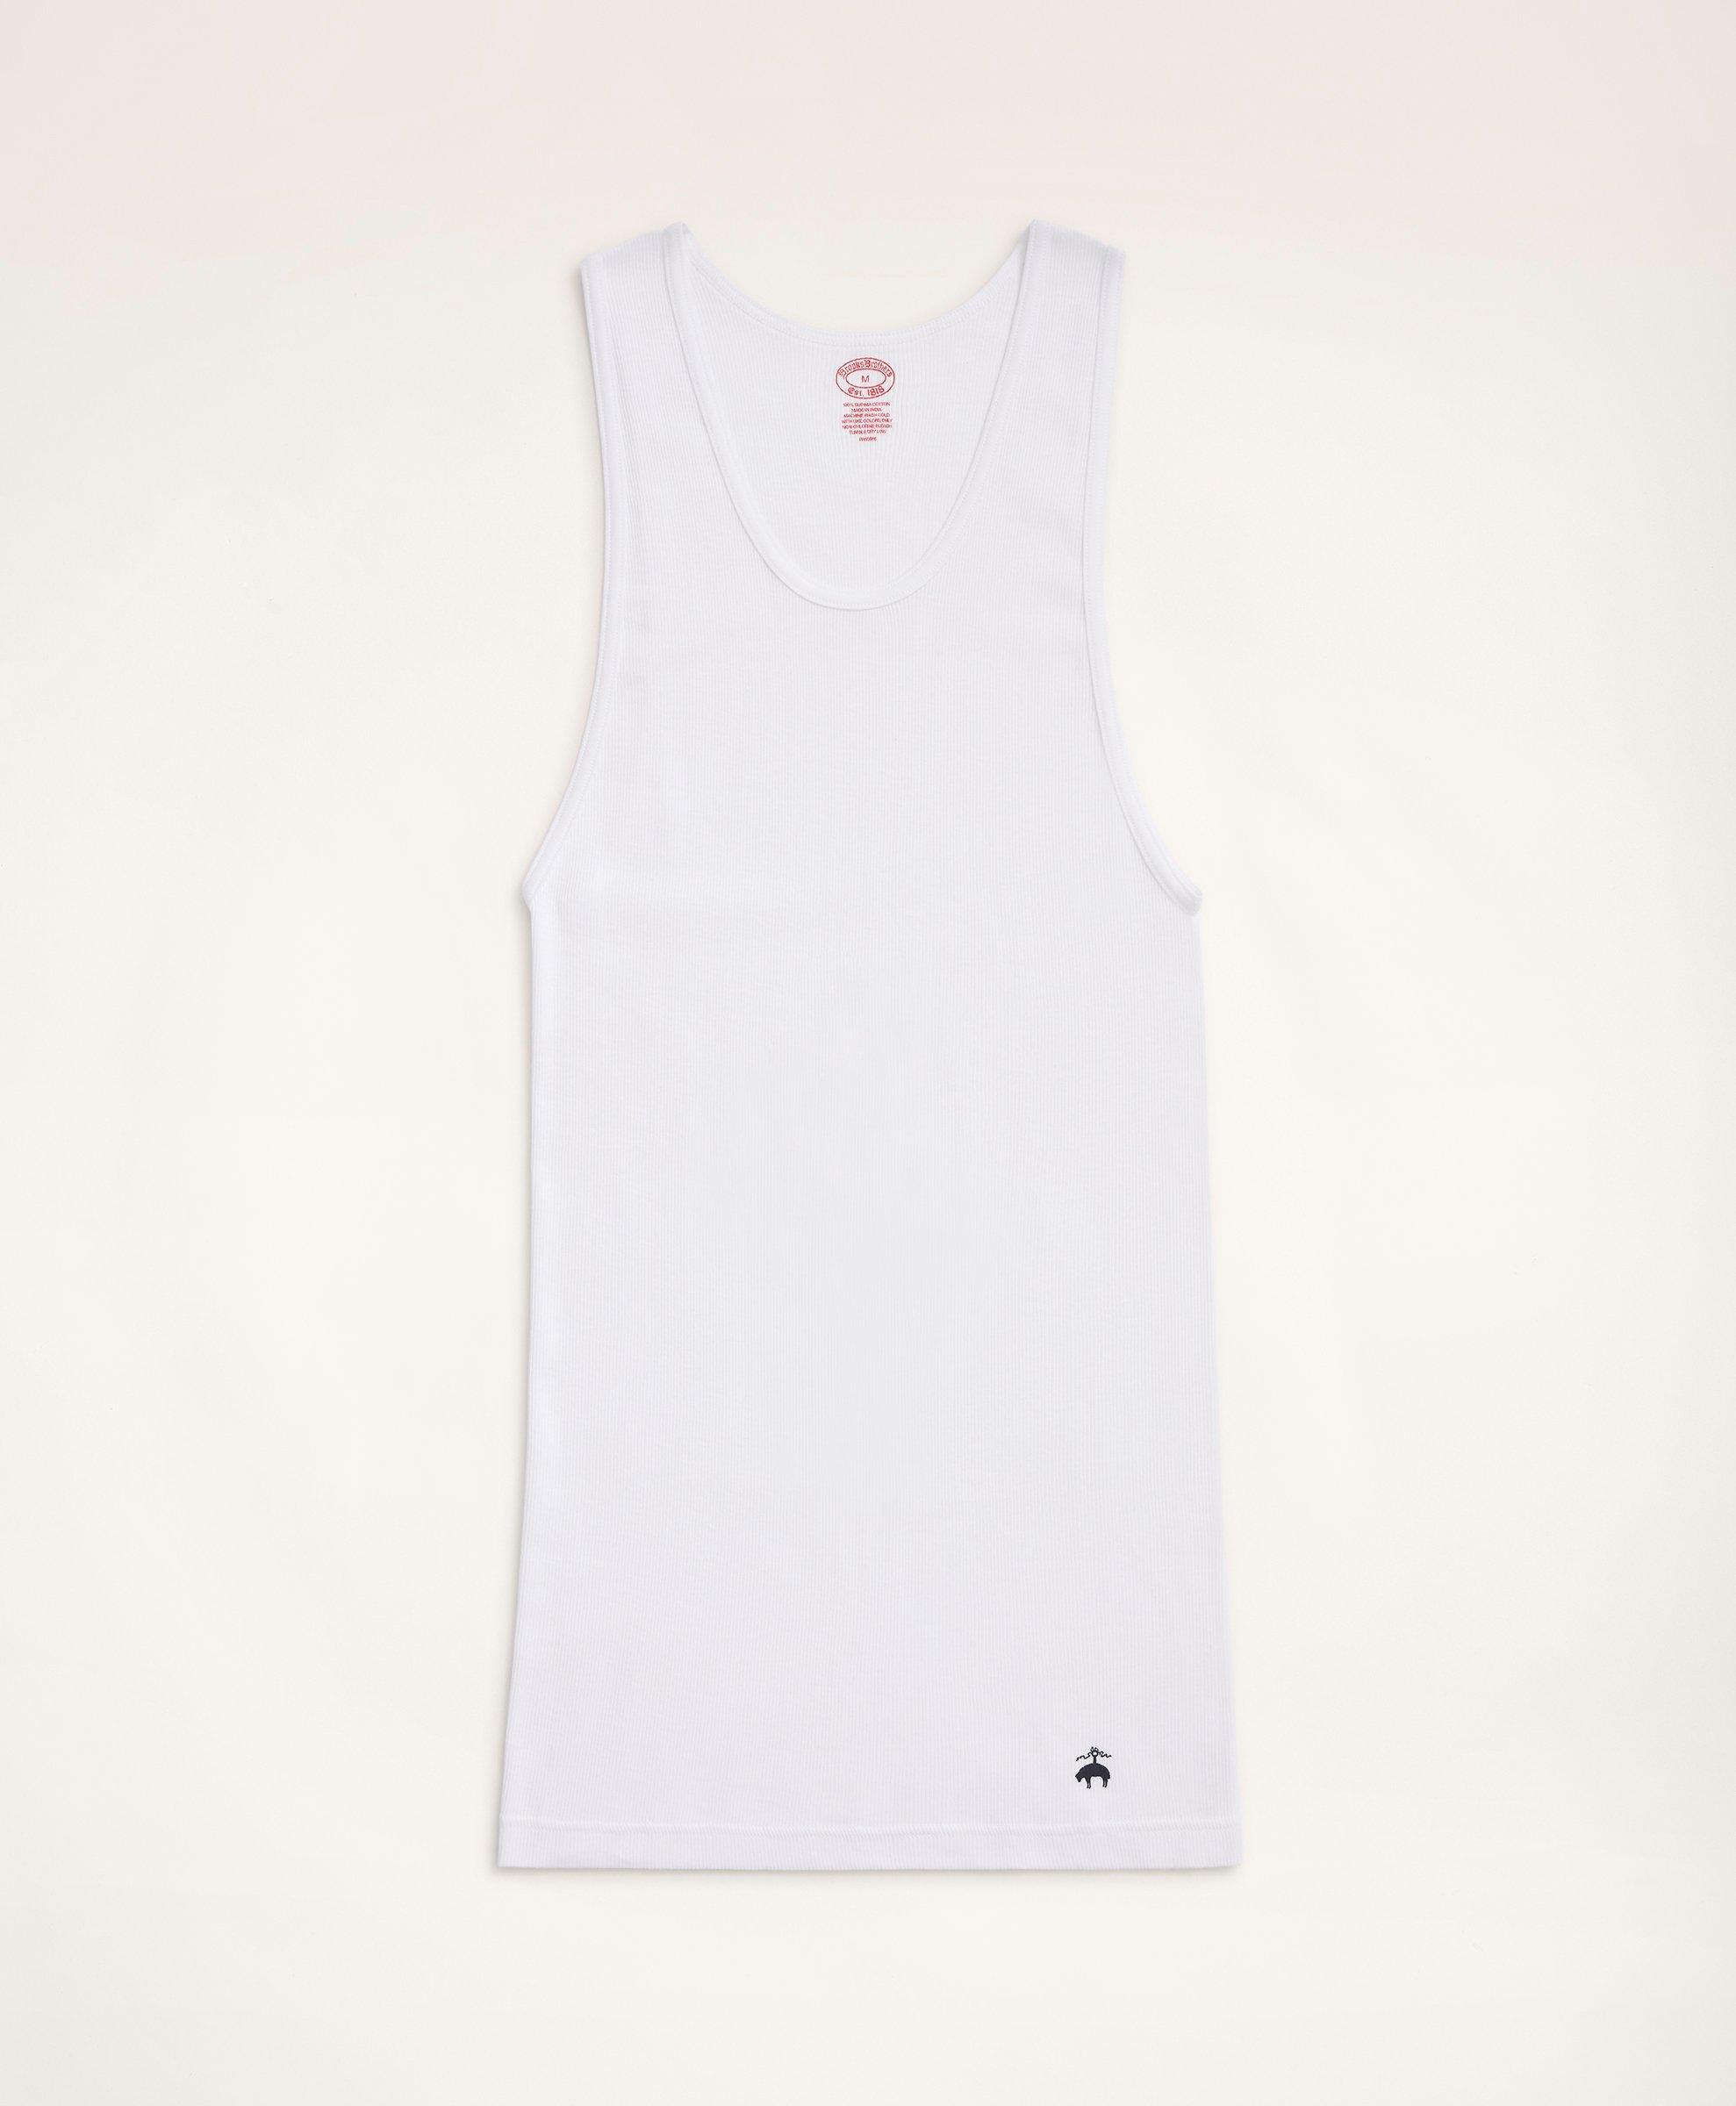 Brooks Brothers Supima Cotton Athletic Undershirt-3 Pack | White | Size Small